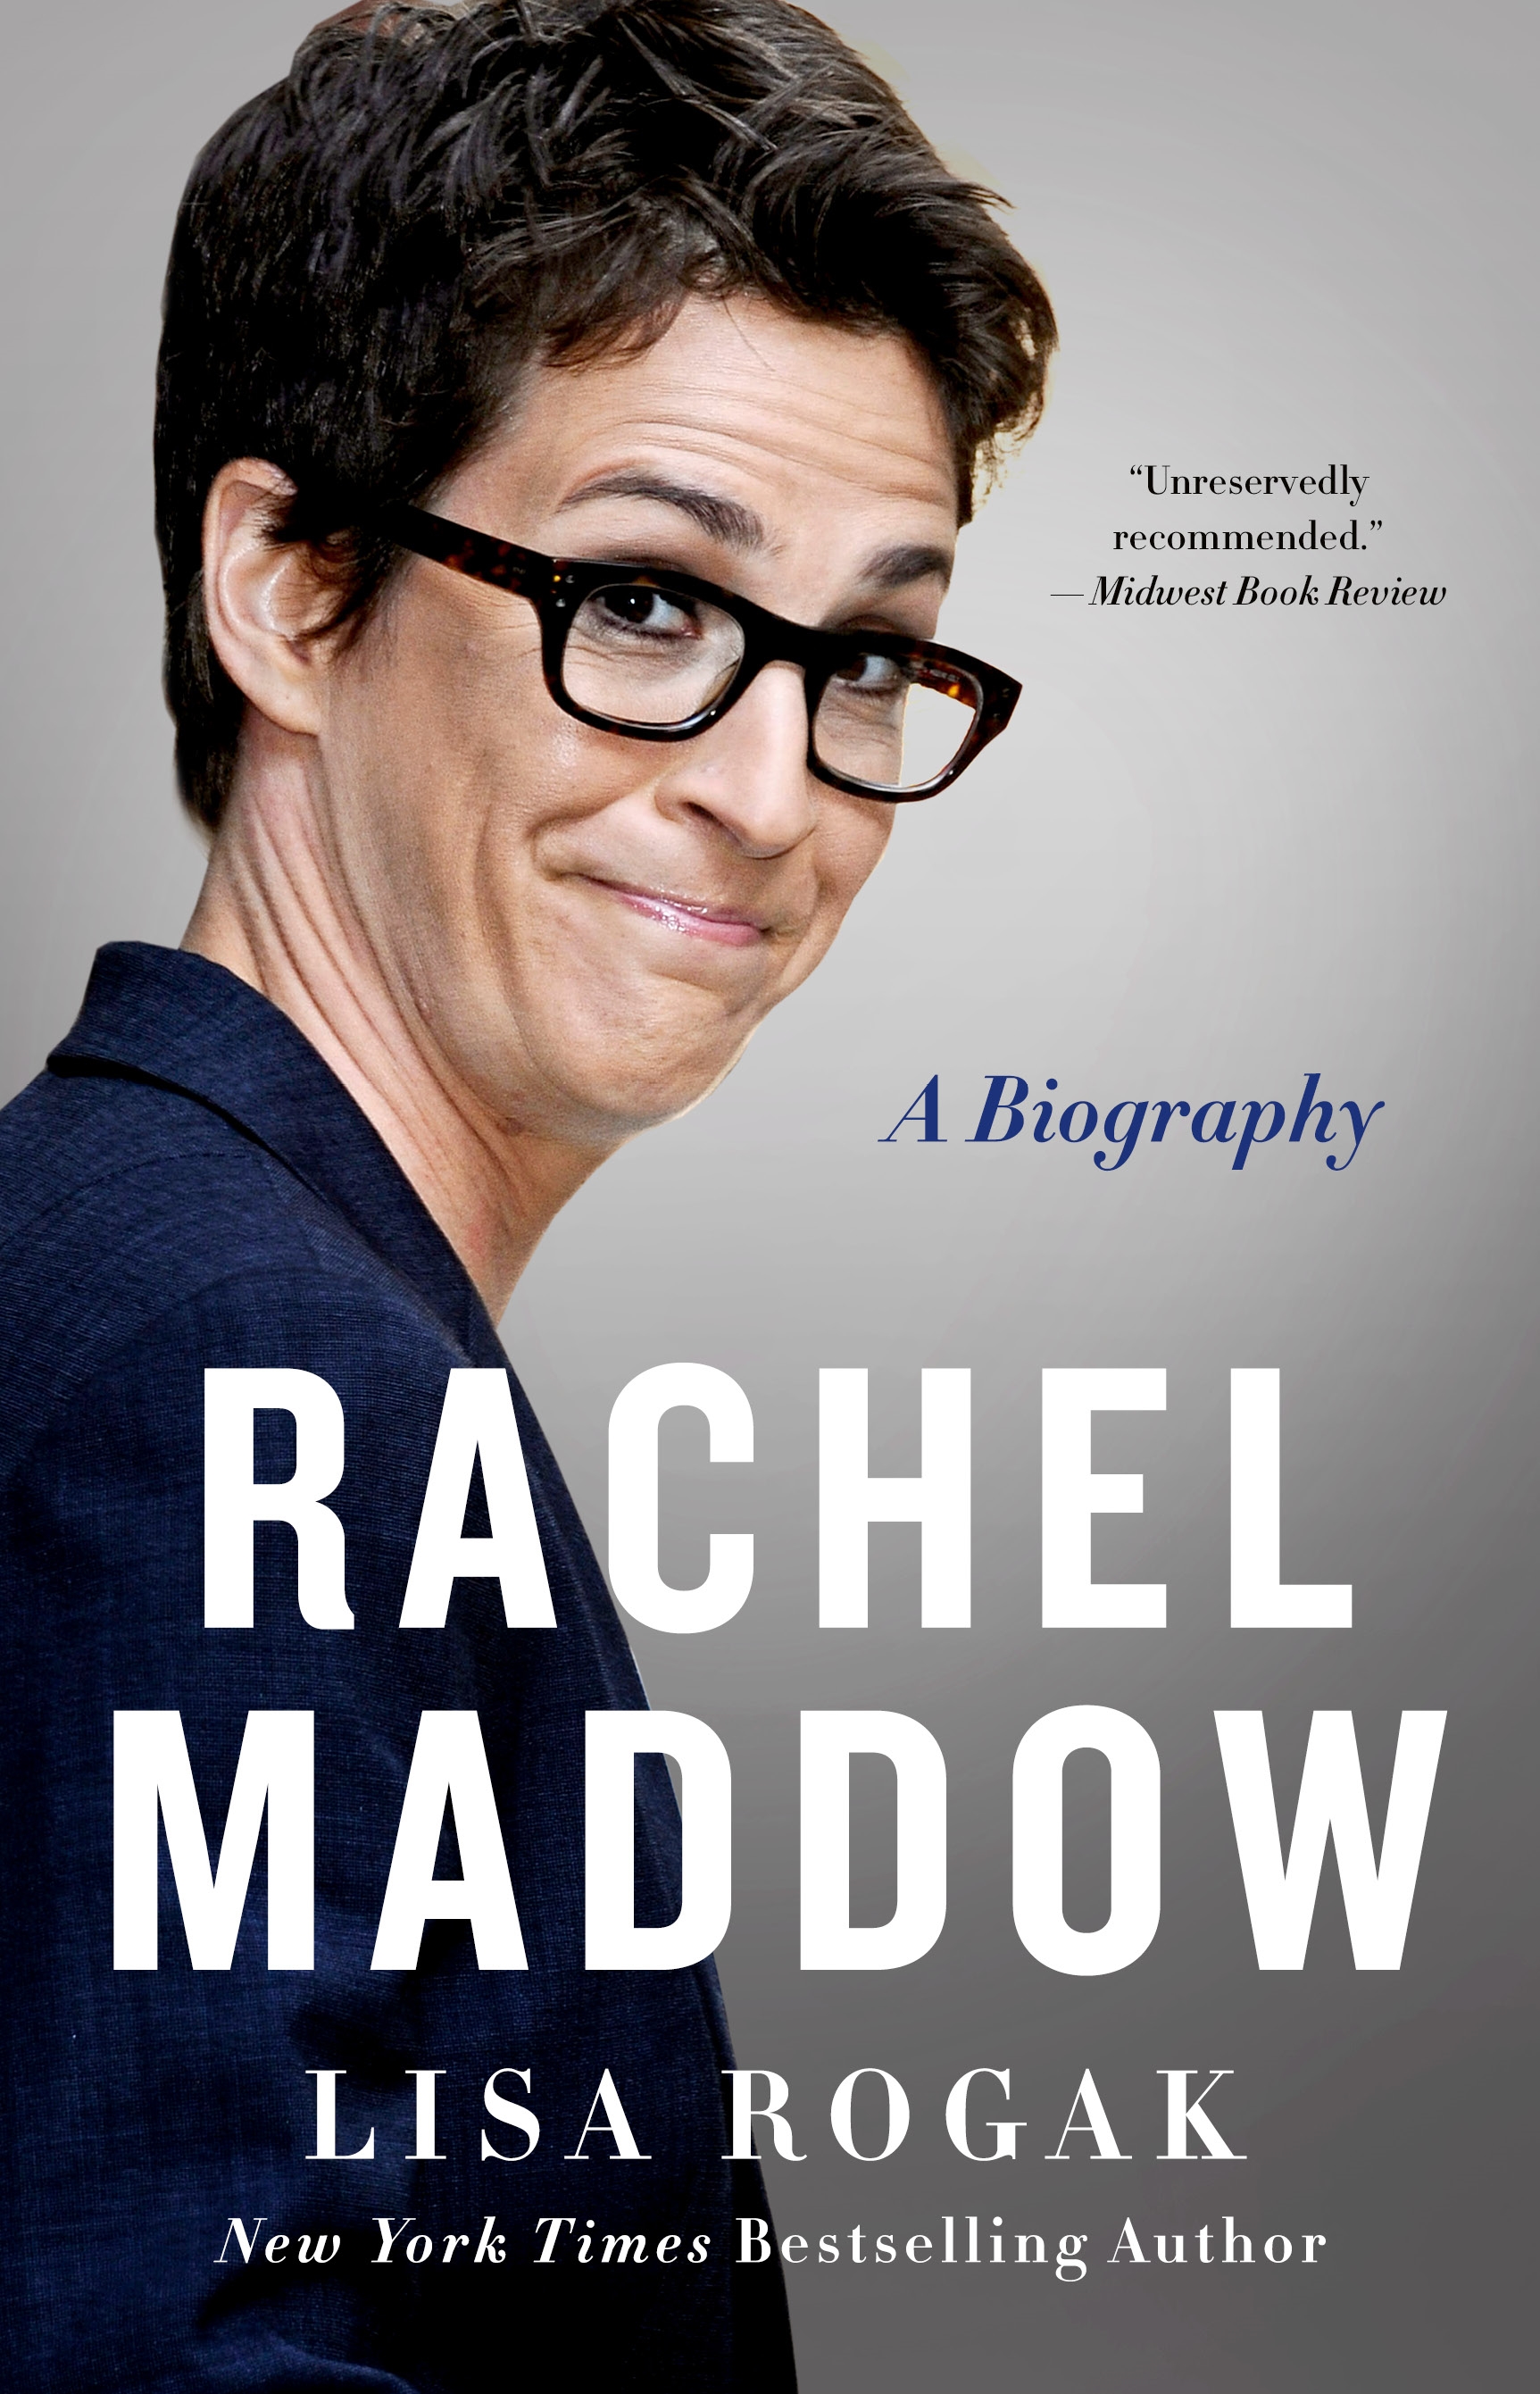 Rachel Maddow cover image